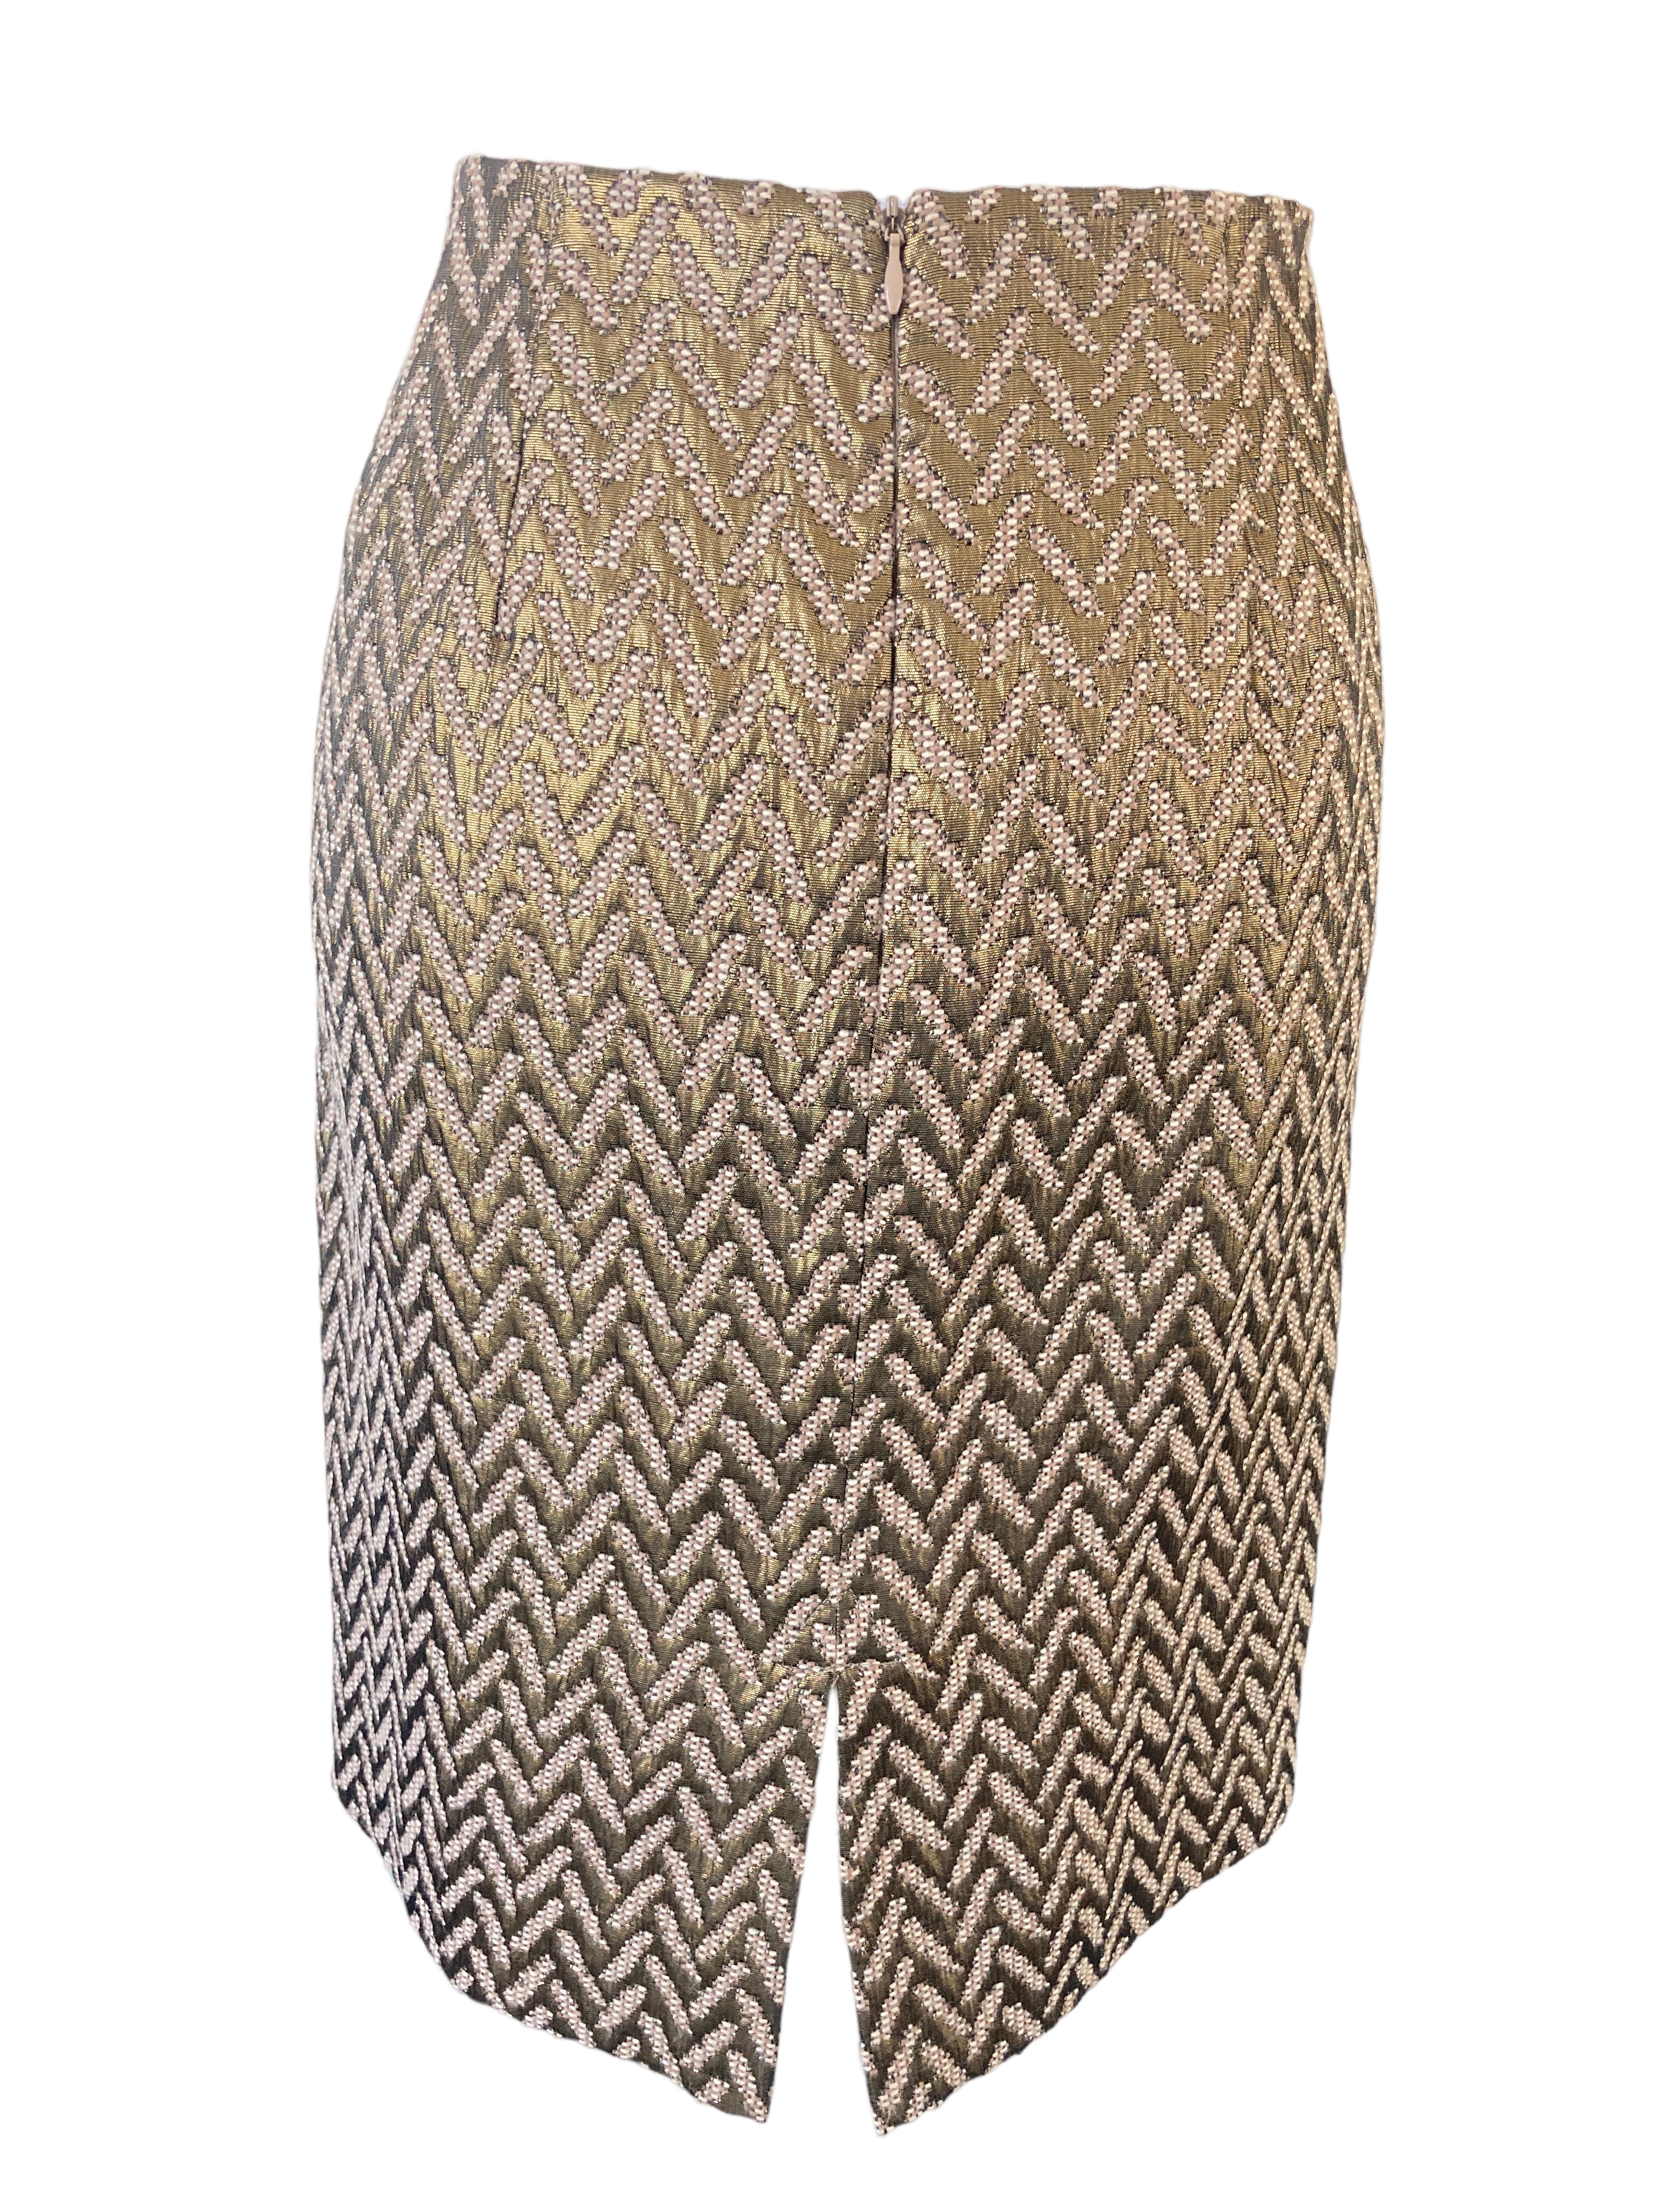 Sara Campbell Gold Festive Skirt, 8